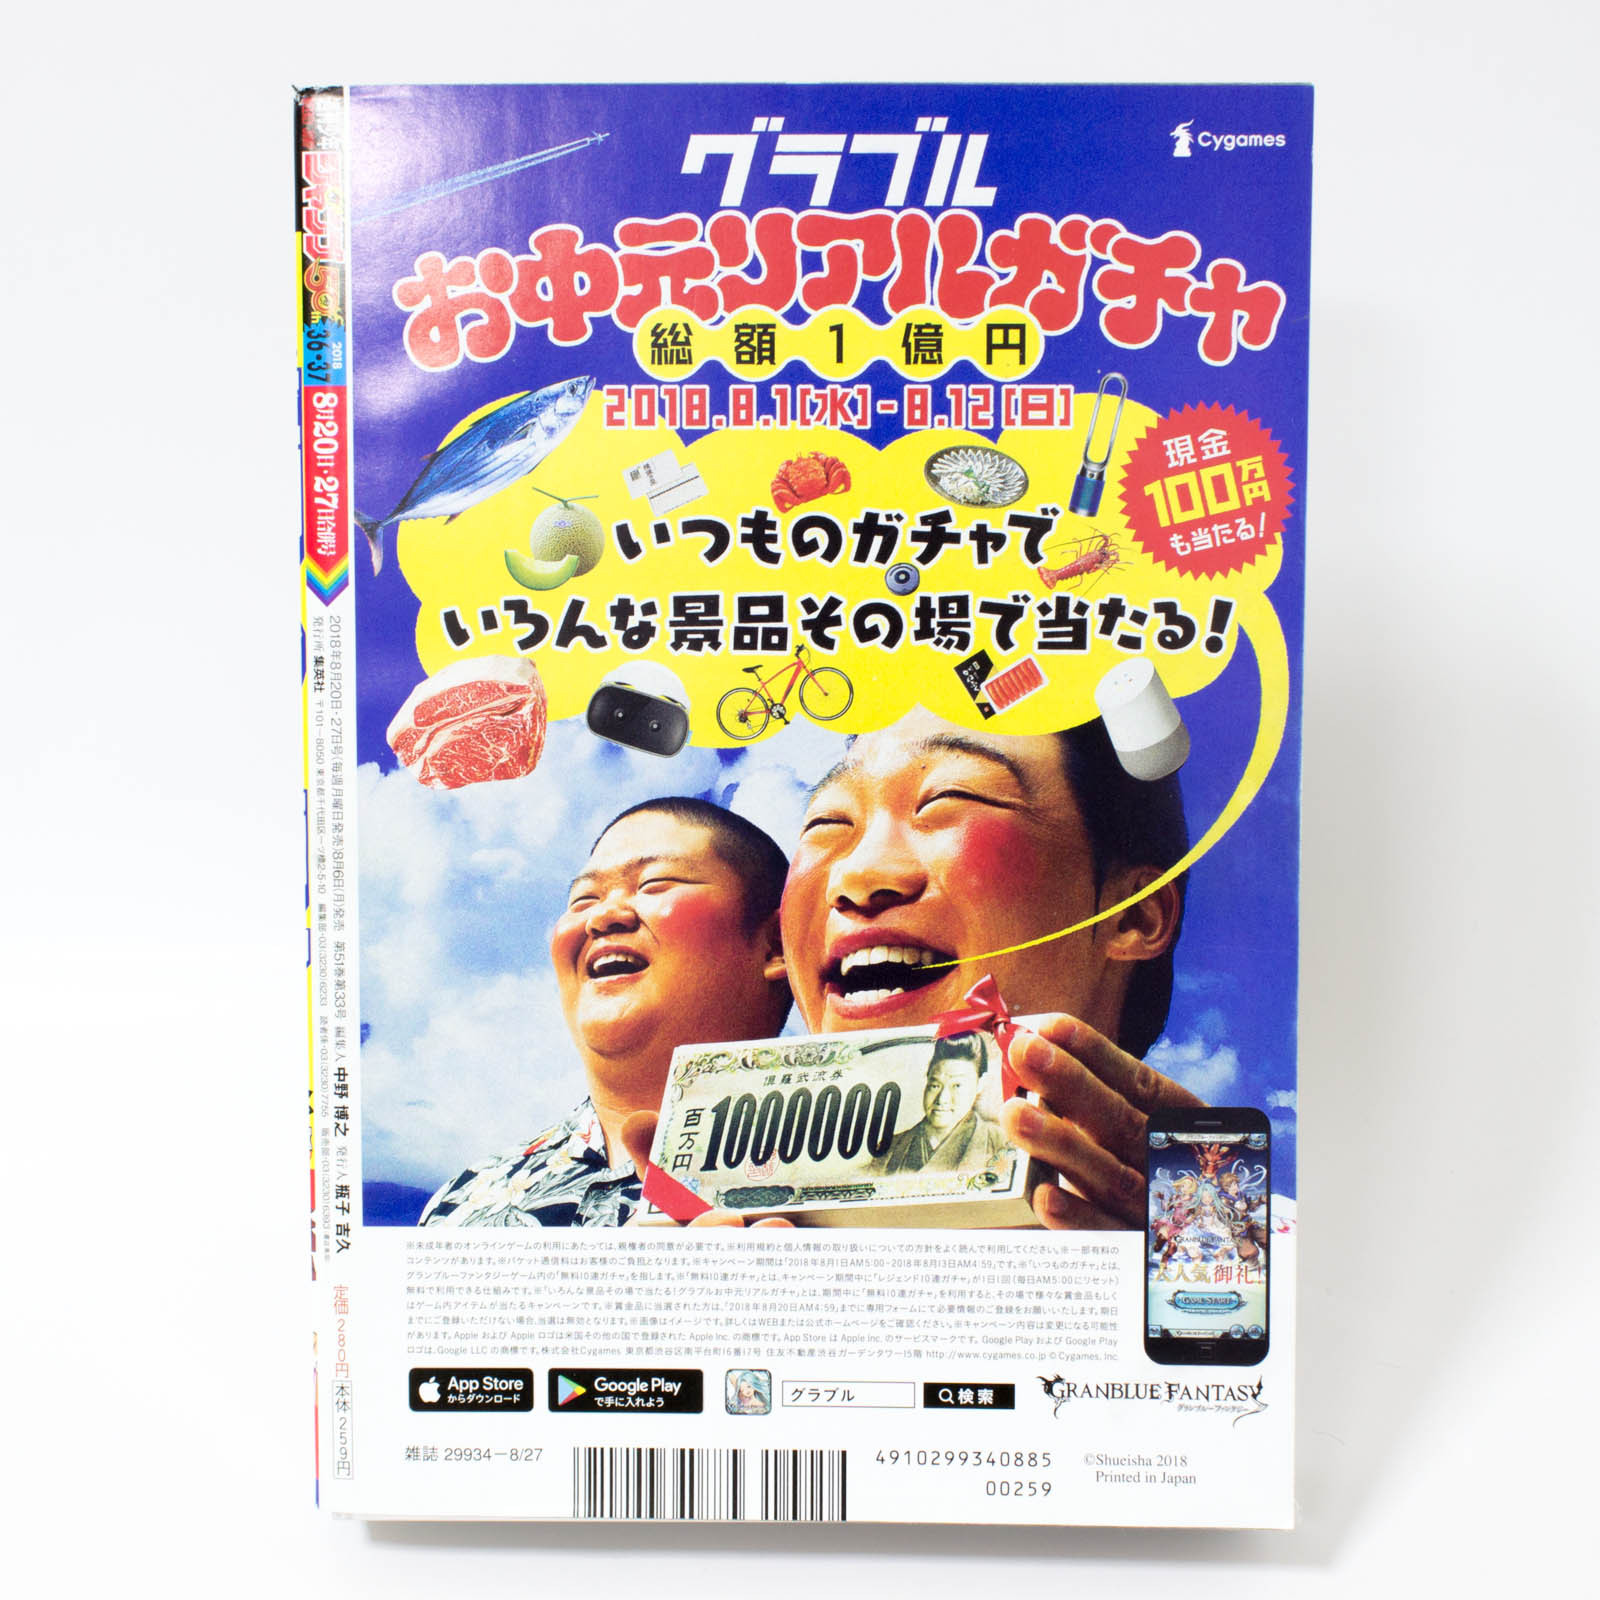 Weekly Shonen JUMP Vol.36-37 2018 (combined number) / Japanese Magazine JAPAN MANGA